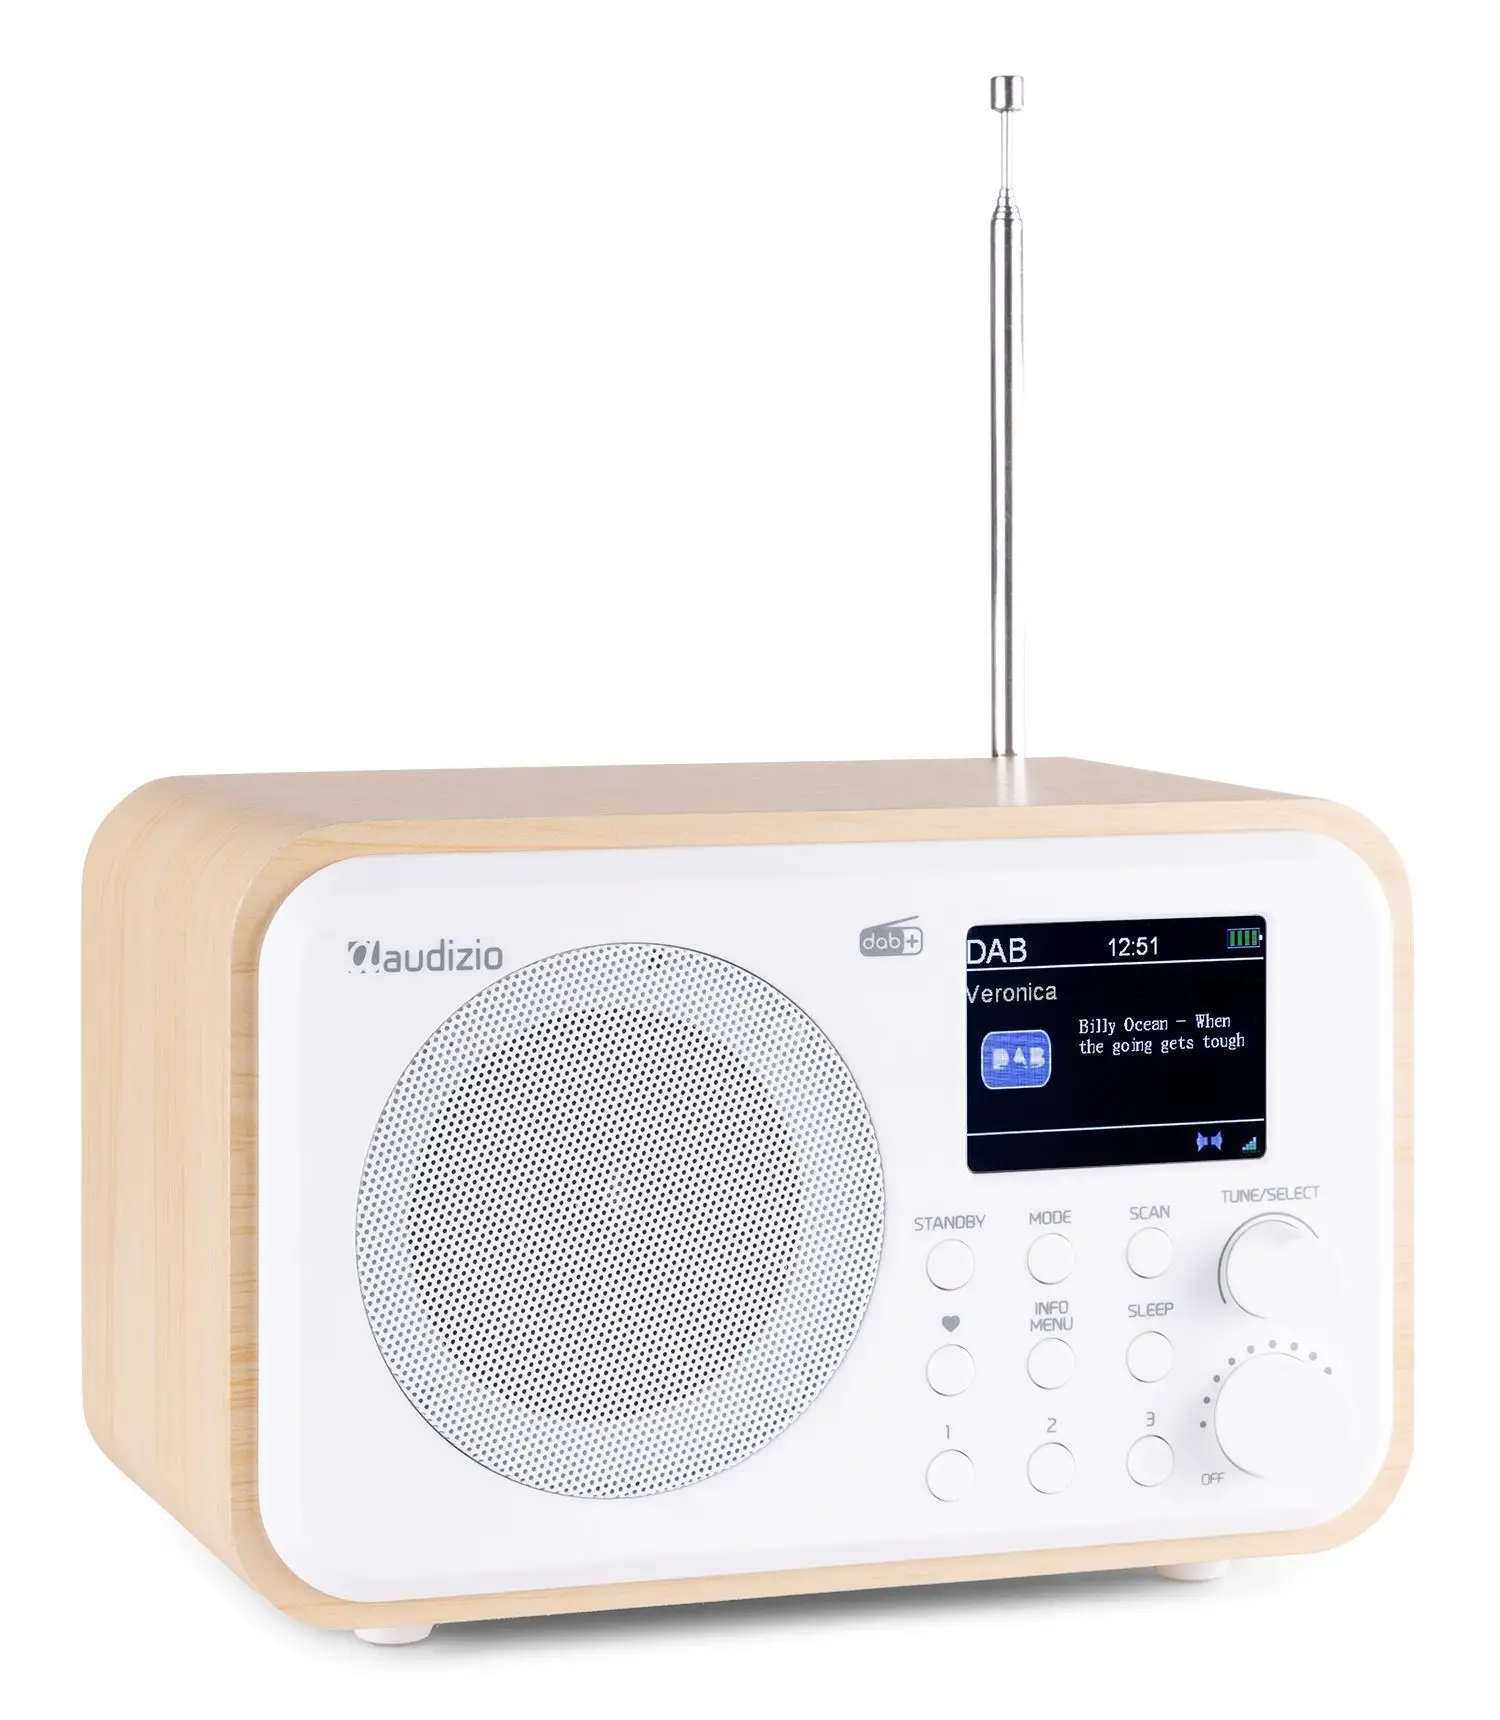 Retourdeal - Audizio Milan draagbare DAB radio met Bluetooth